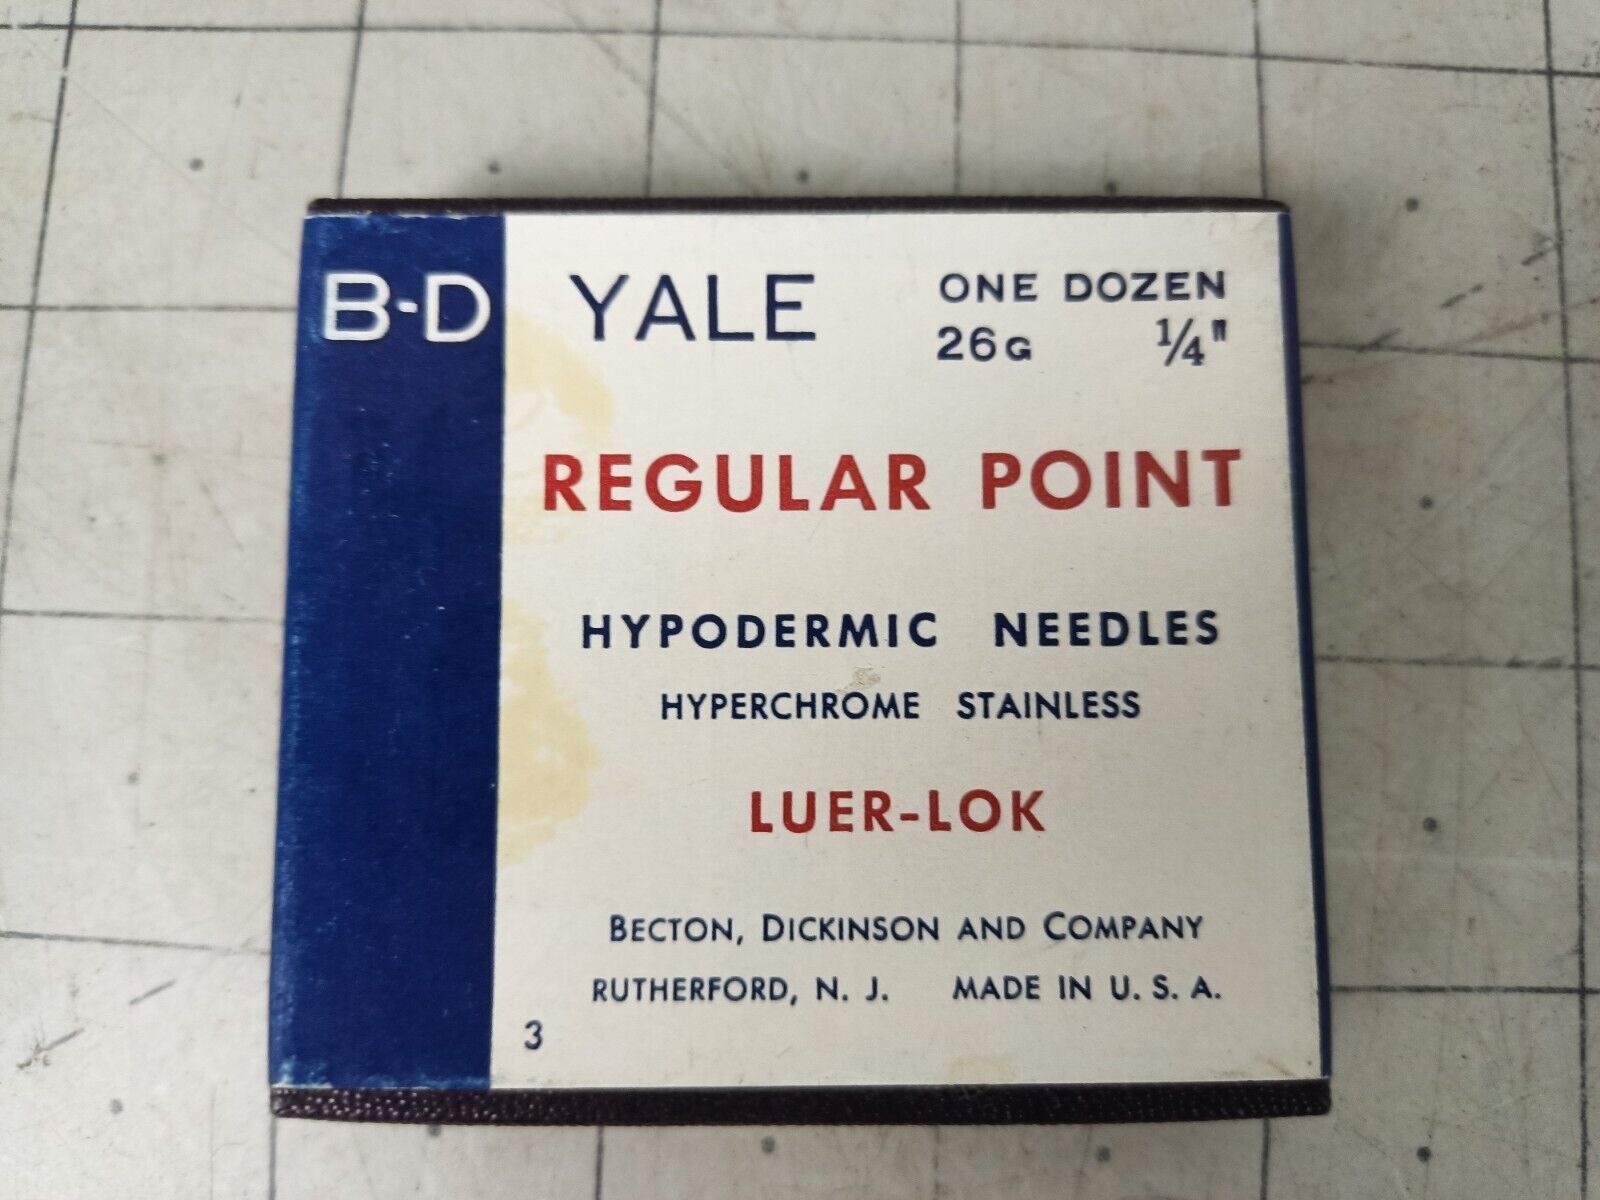 B-D YALE LUER-LOK ORIGINAL BOX OF 10 REGULAR POINT HYPODERMIC NEEDLES 26G 1/4”